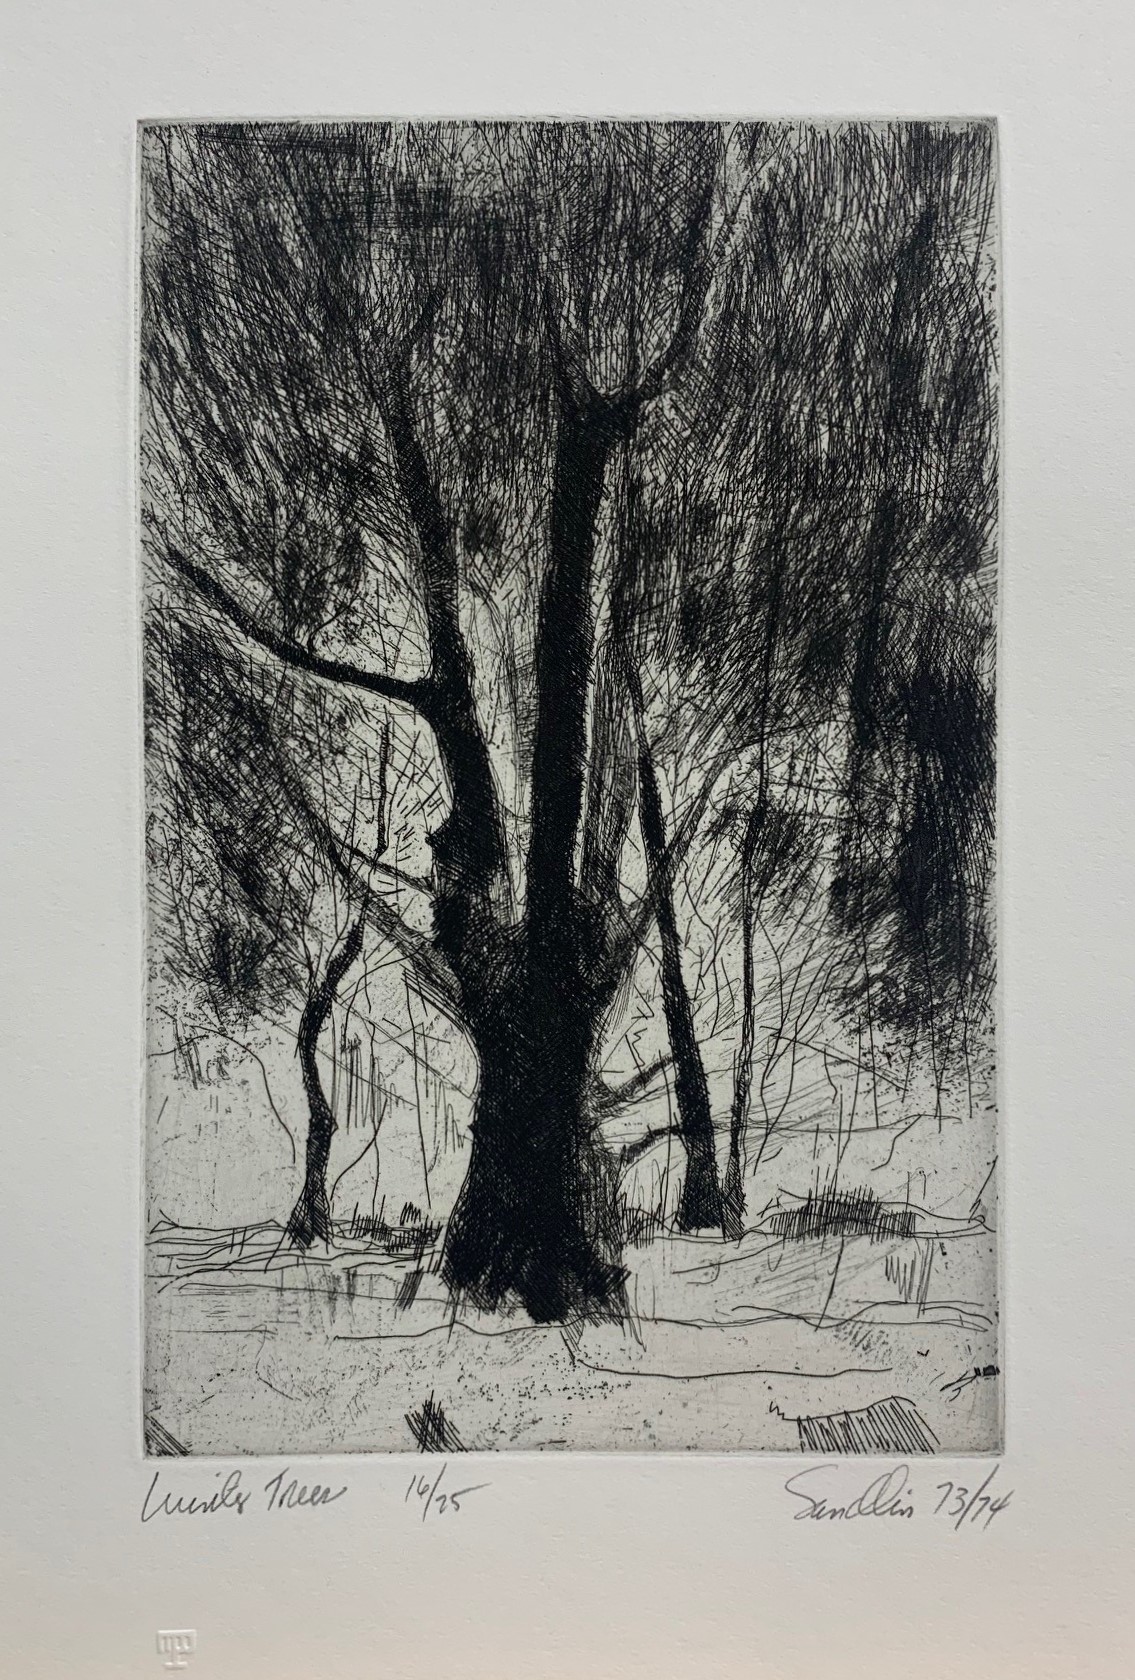 John Sandlin, “Winter Trees ed 16/25”, etching